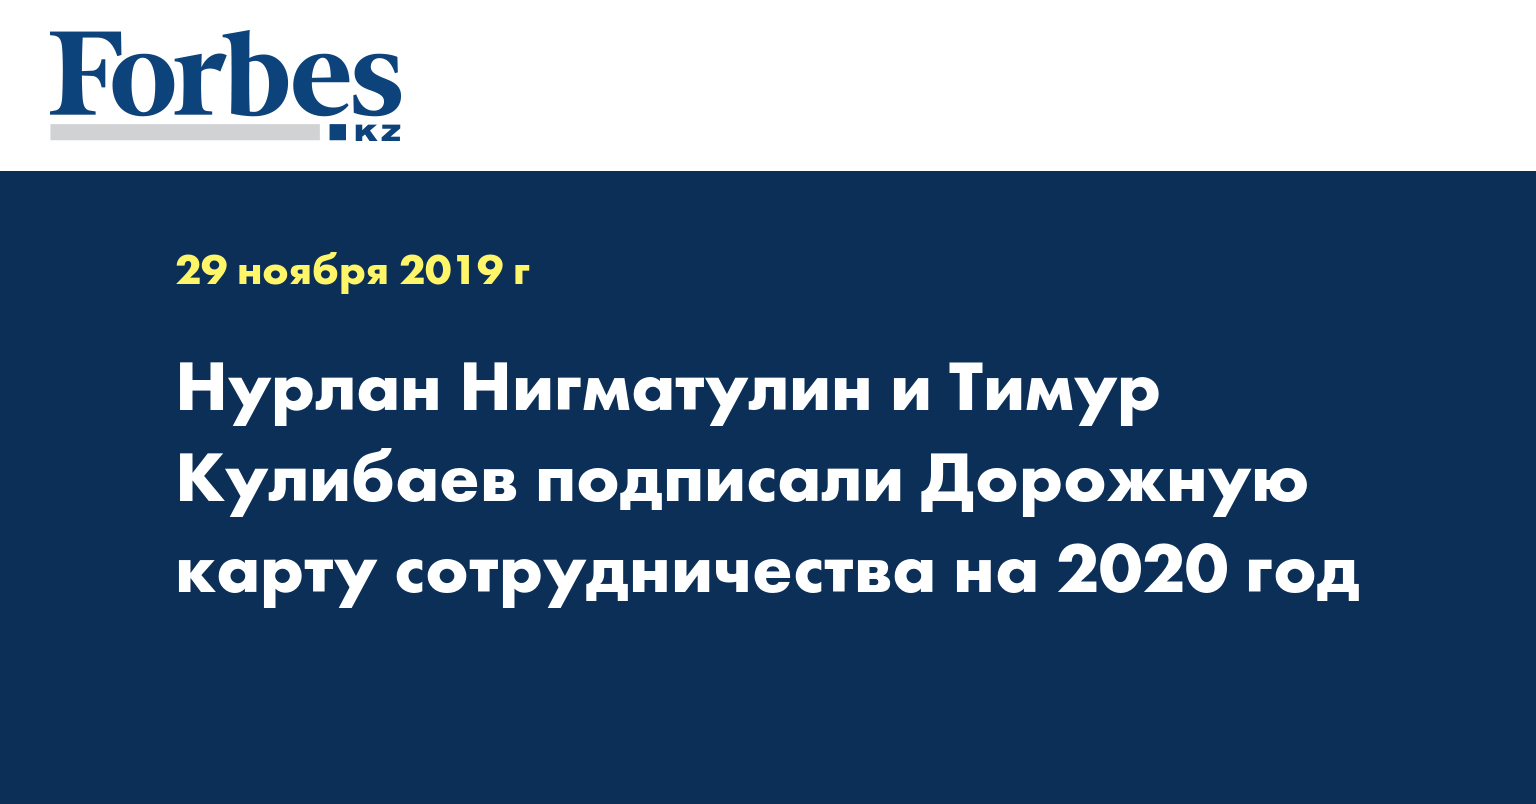 Нурлан Нигматулин и Тимур Кулибаев подписали Дорожную карту сотрудничества на 2020 год